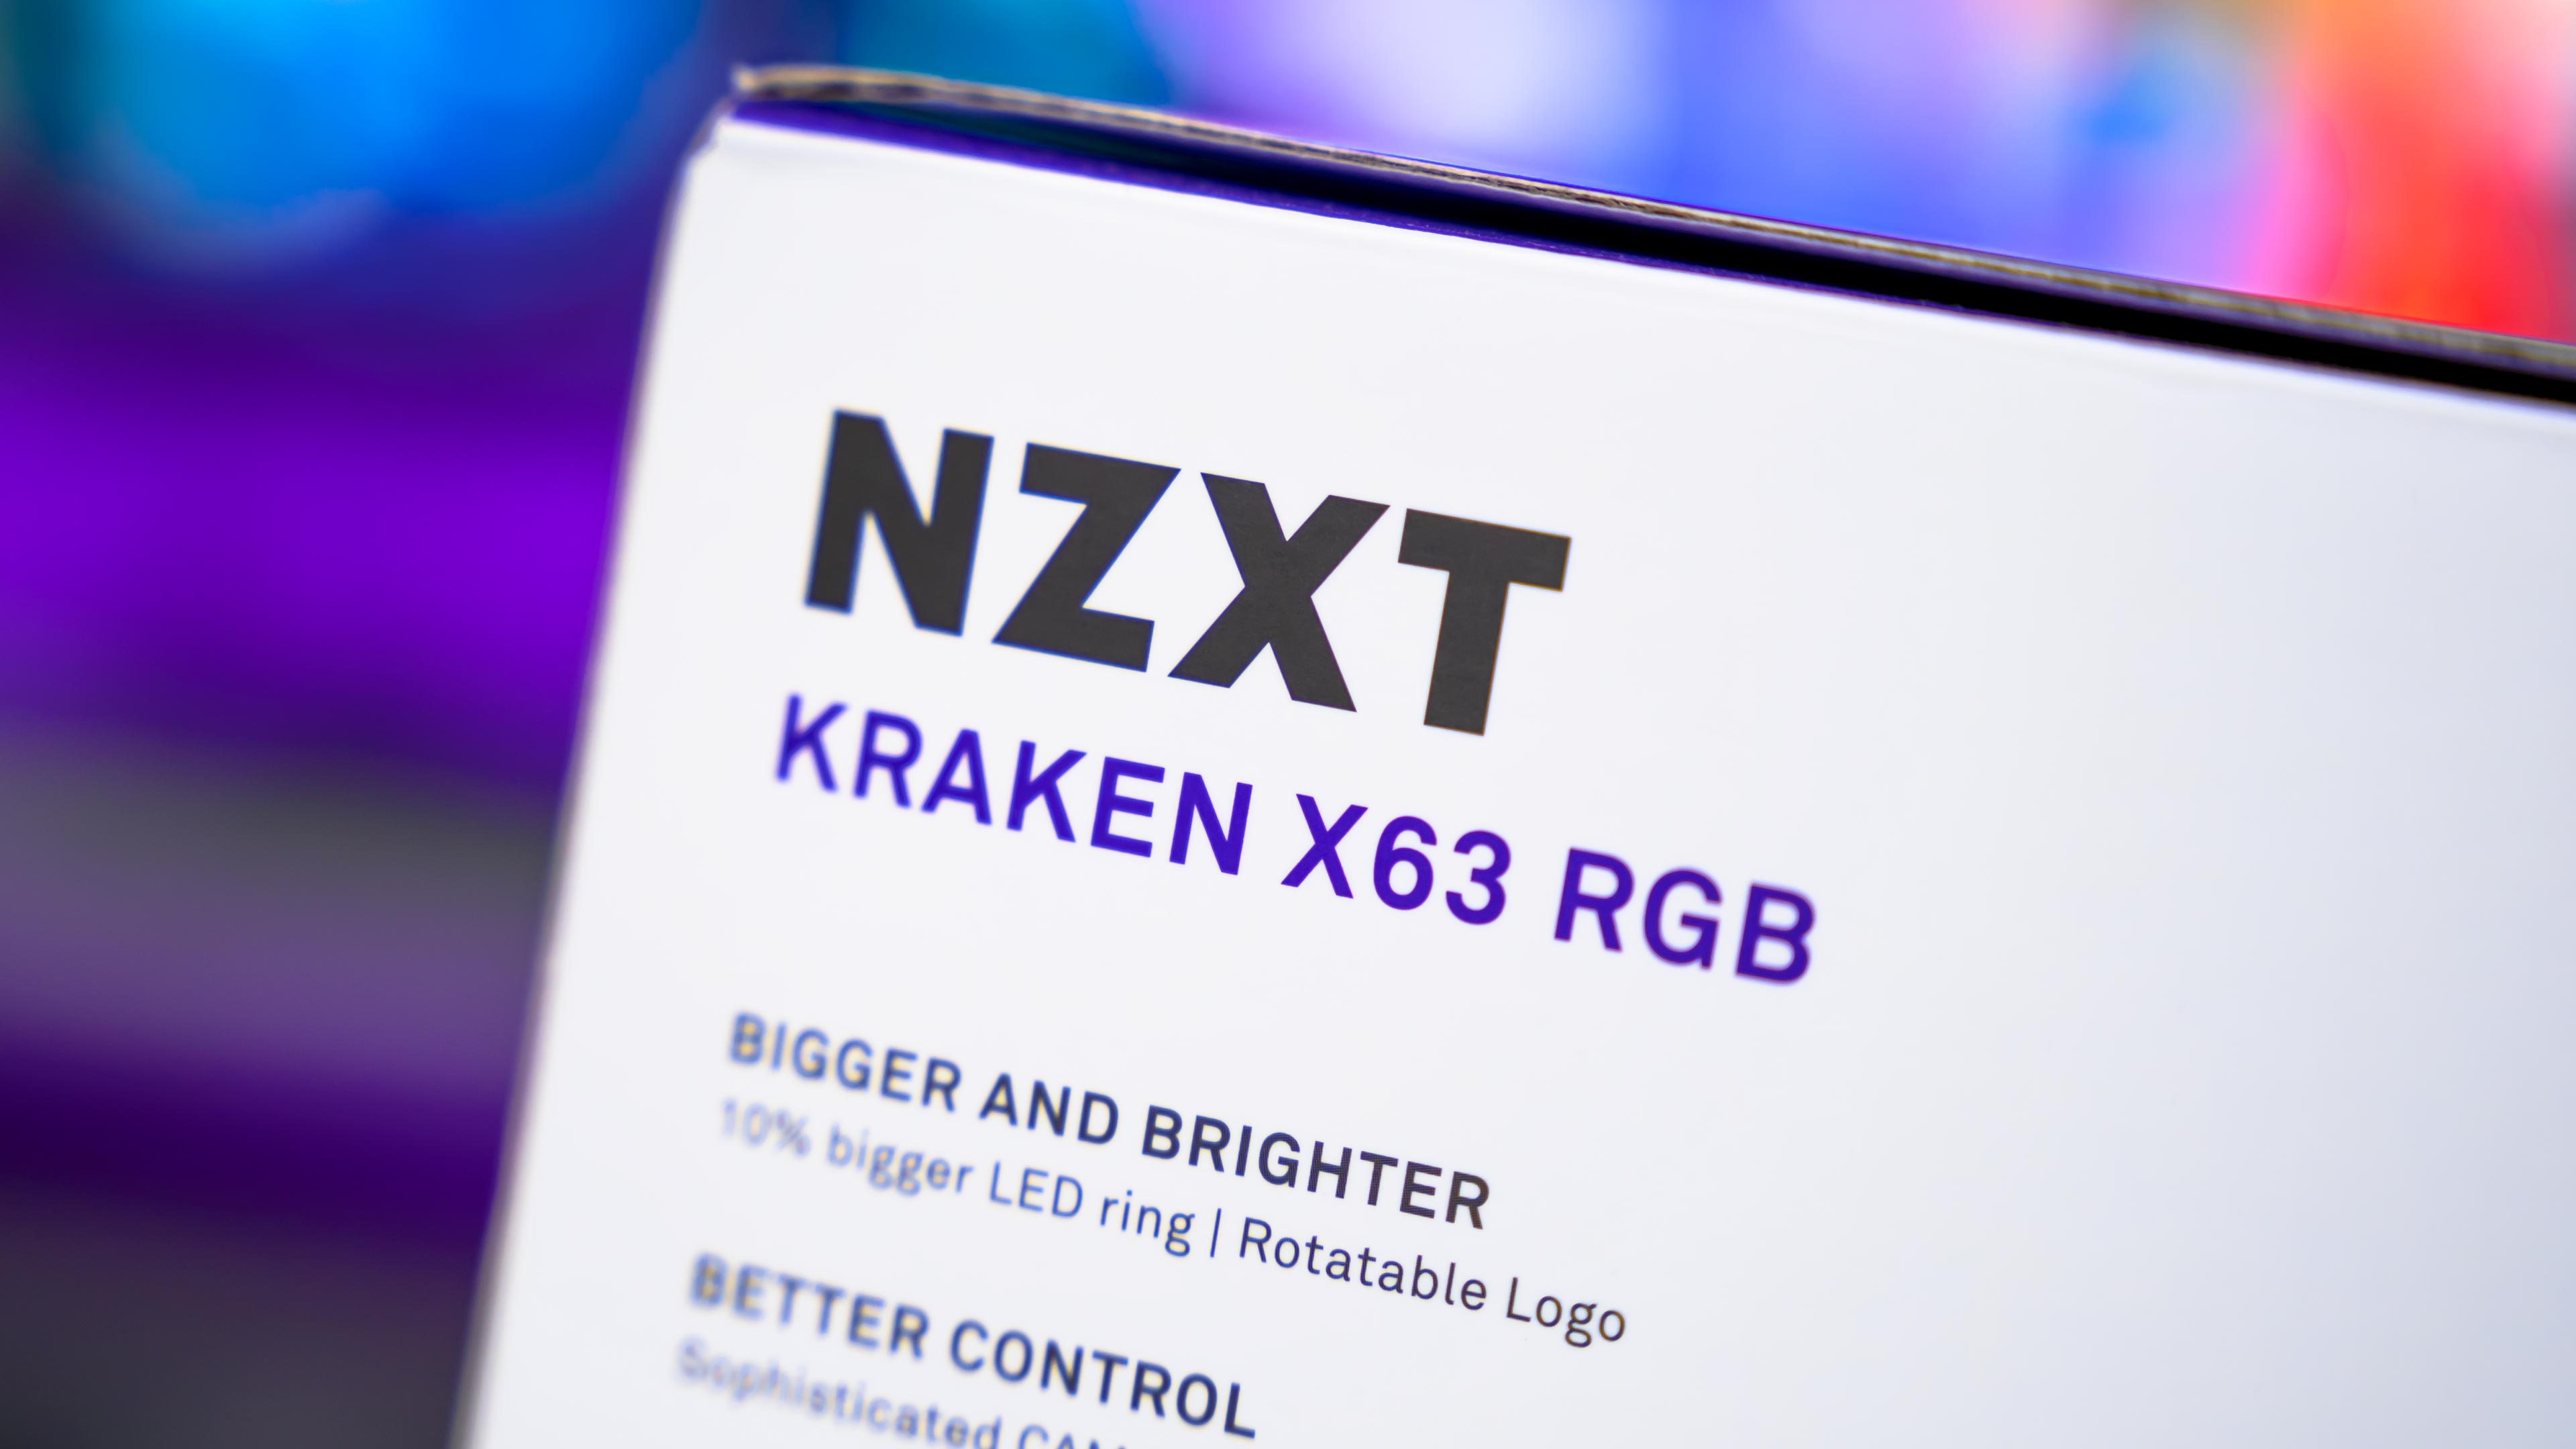 NZXT Kraken X63 RGB White Box (6)